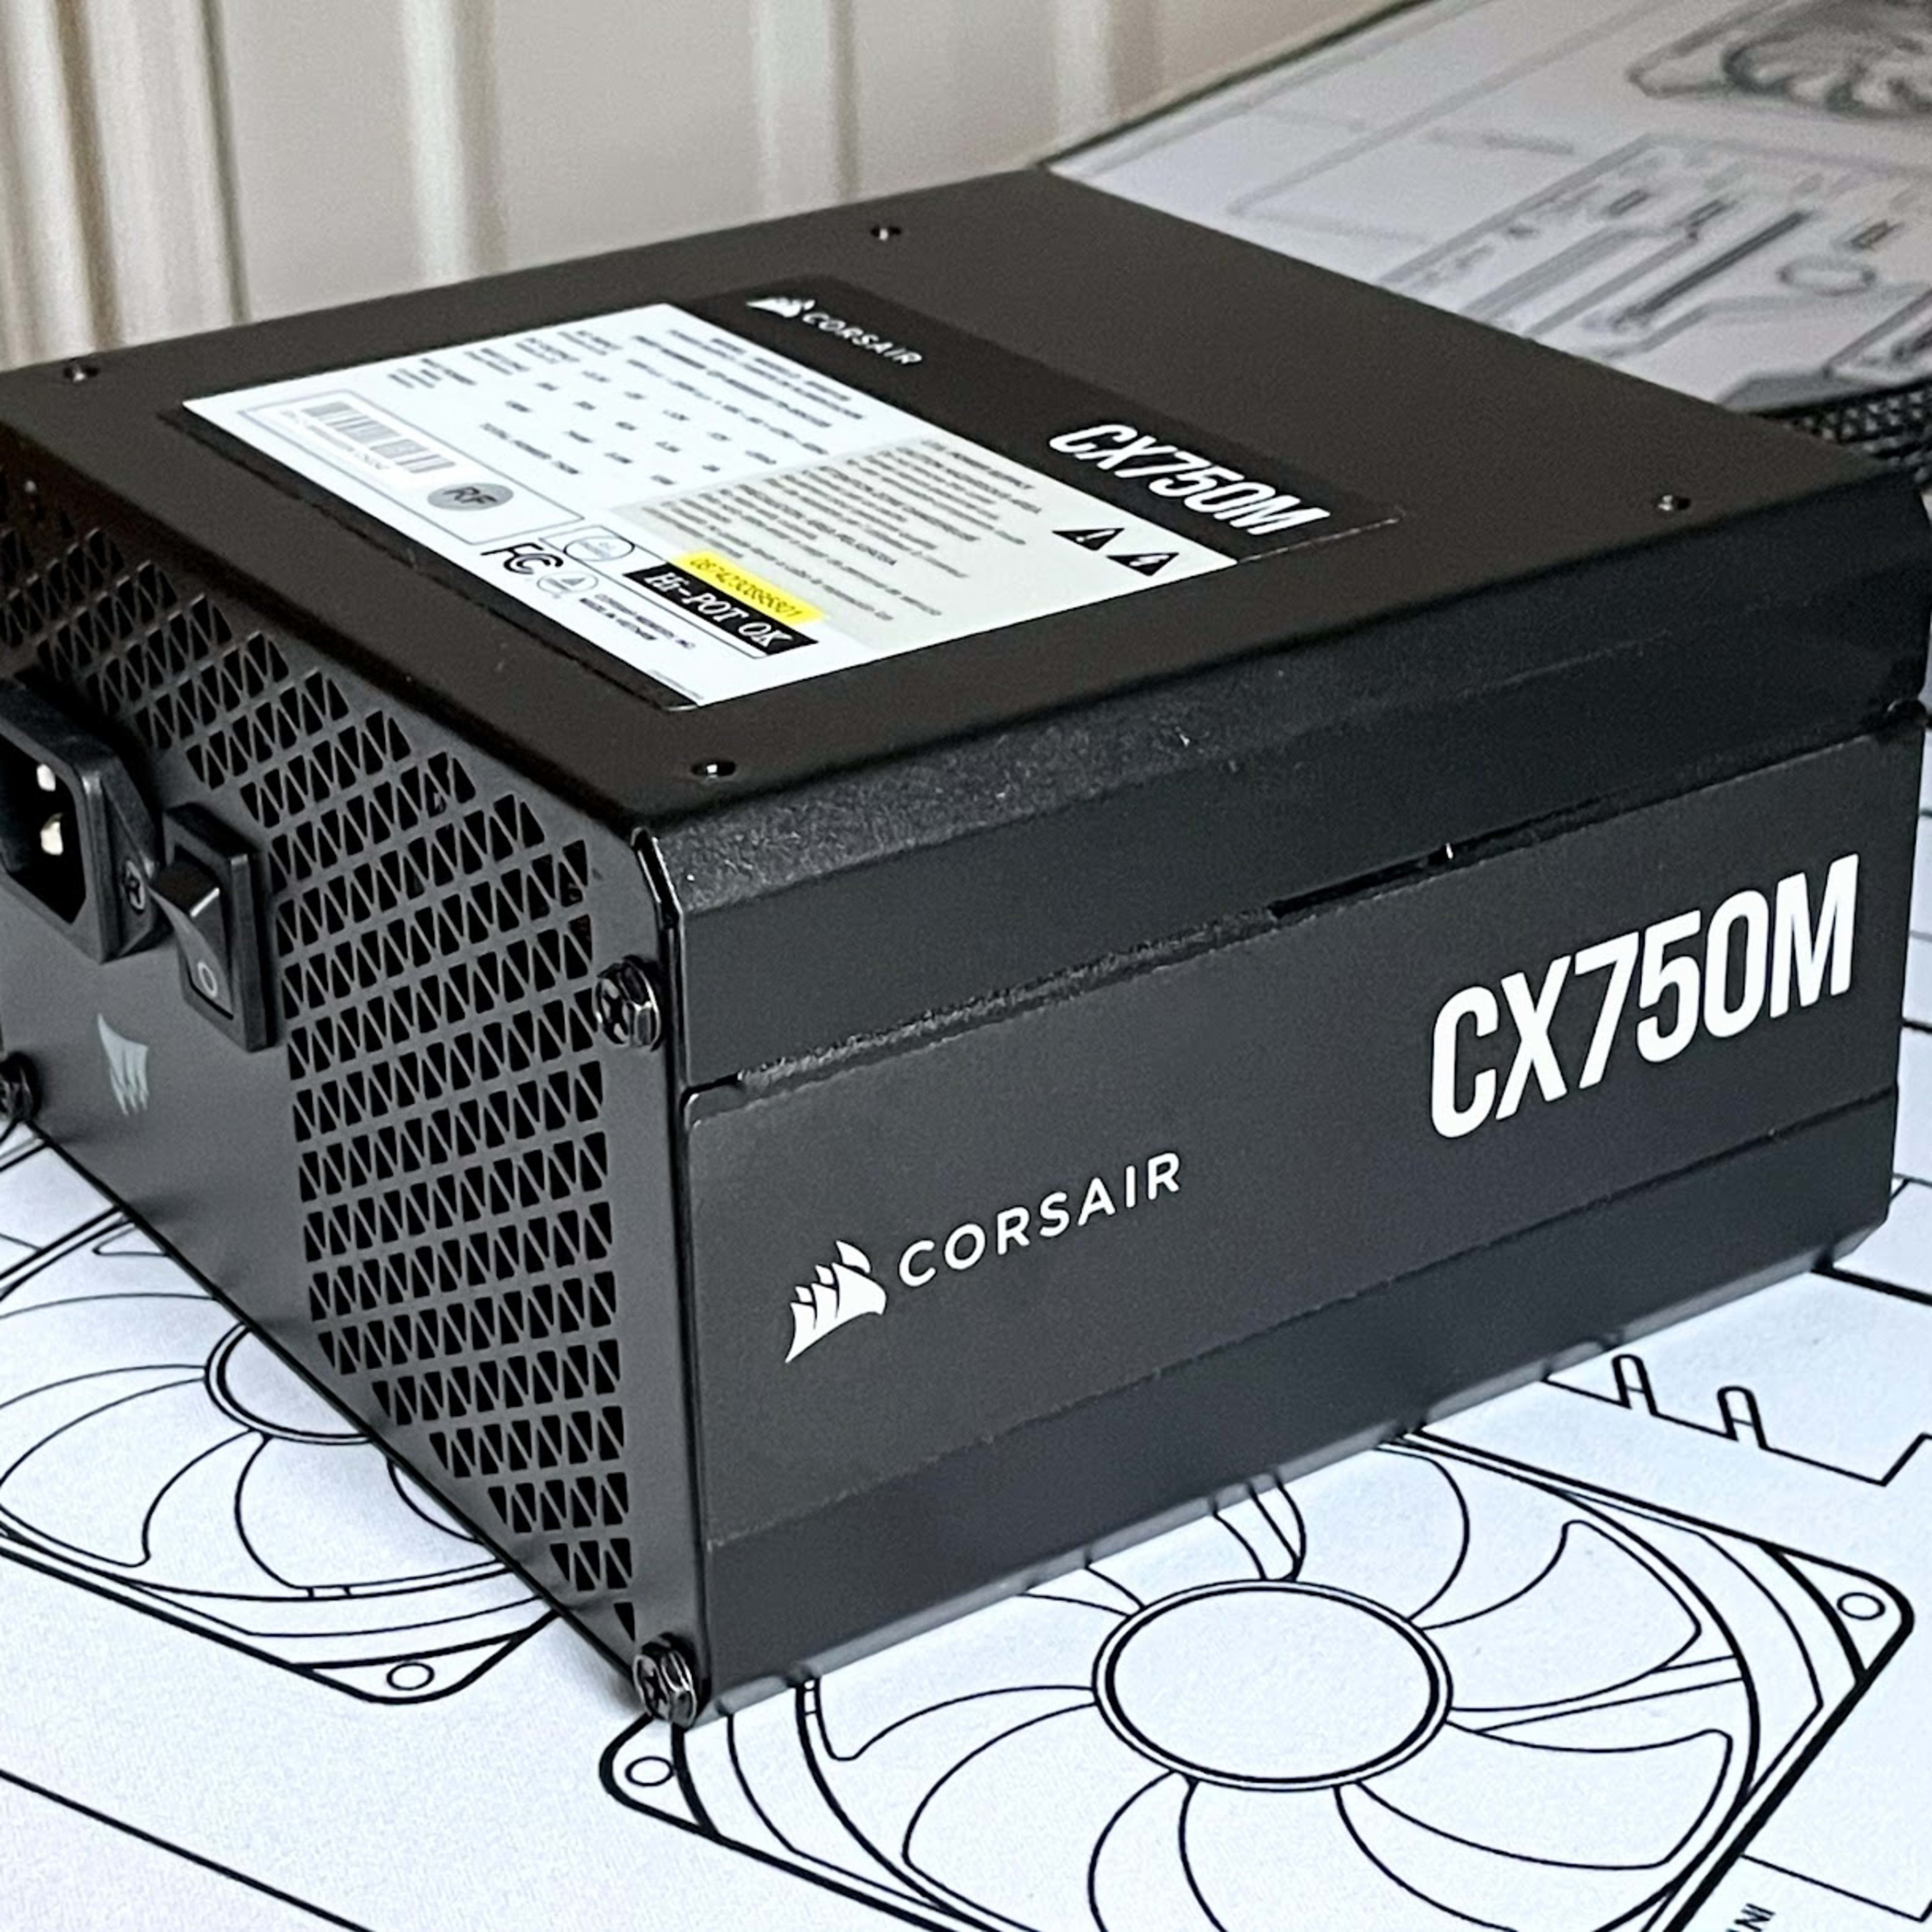 Corsair CX750M - 750 Watt 80 PLUS Bronze Certified Semi-Modular ATX PSU w/ All Original Cables